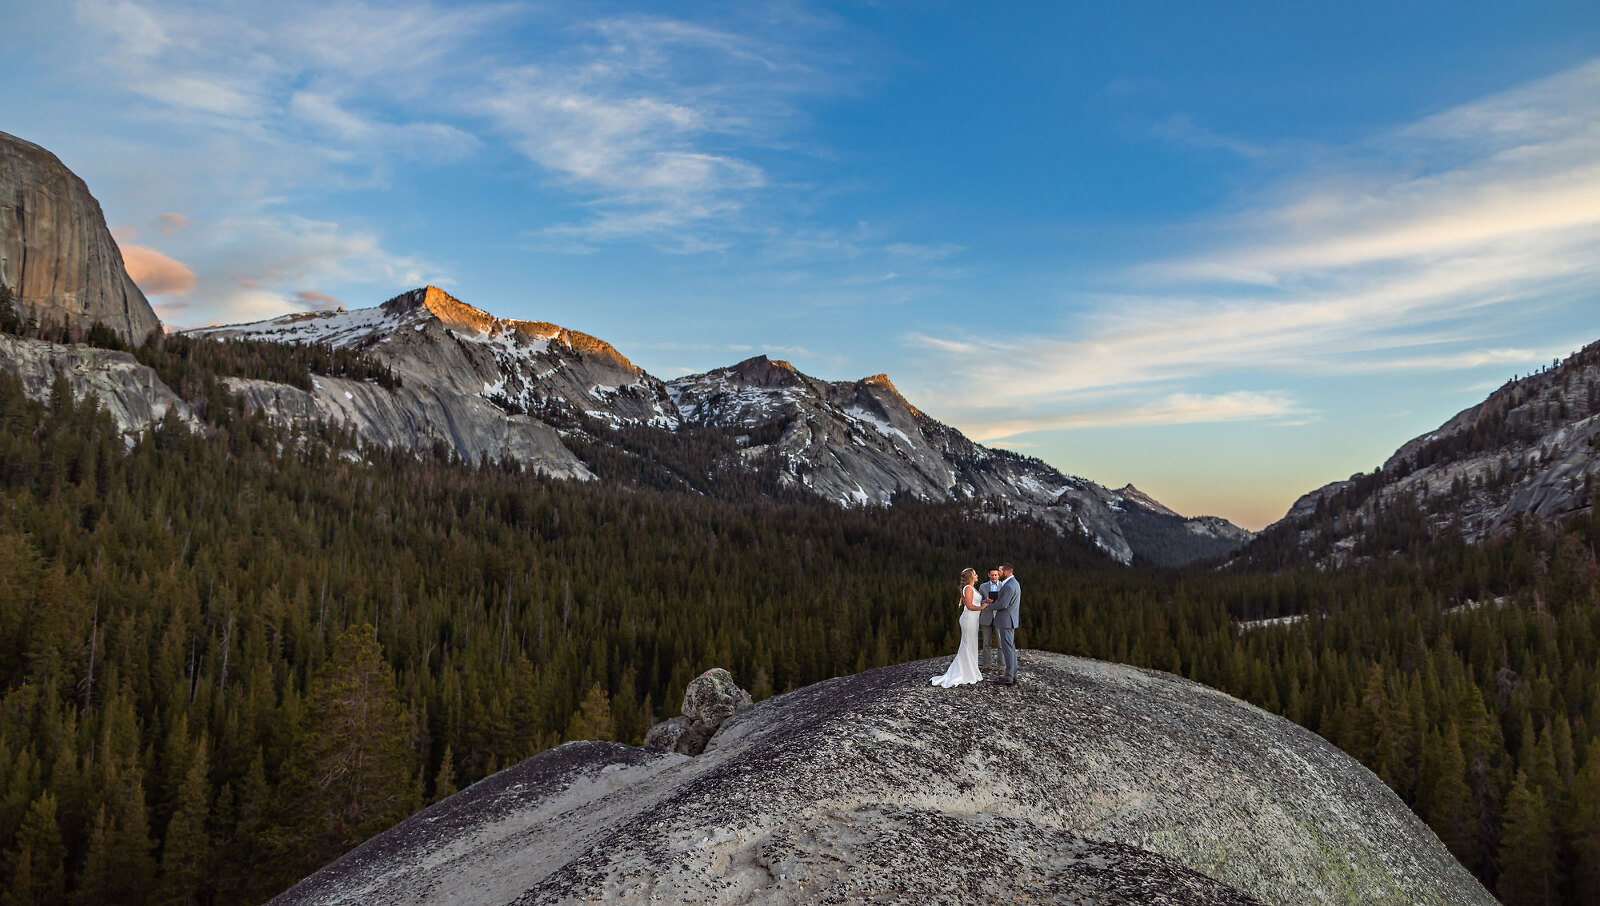 Mountain wedding photography at sunset